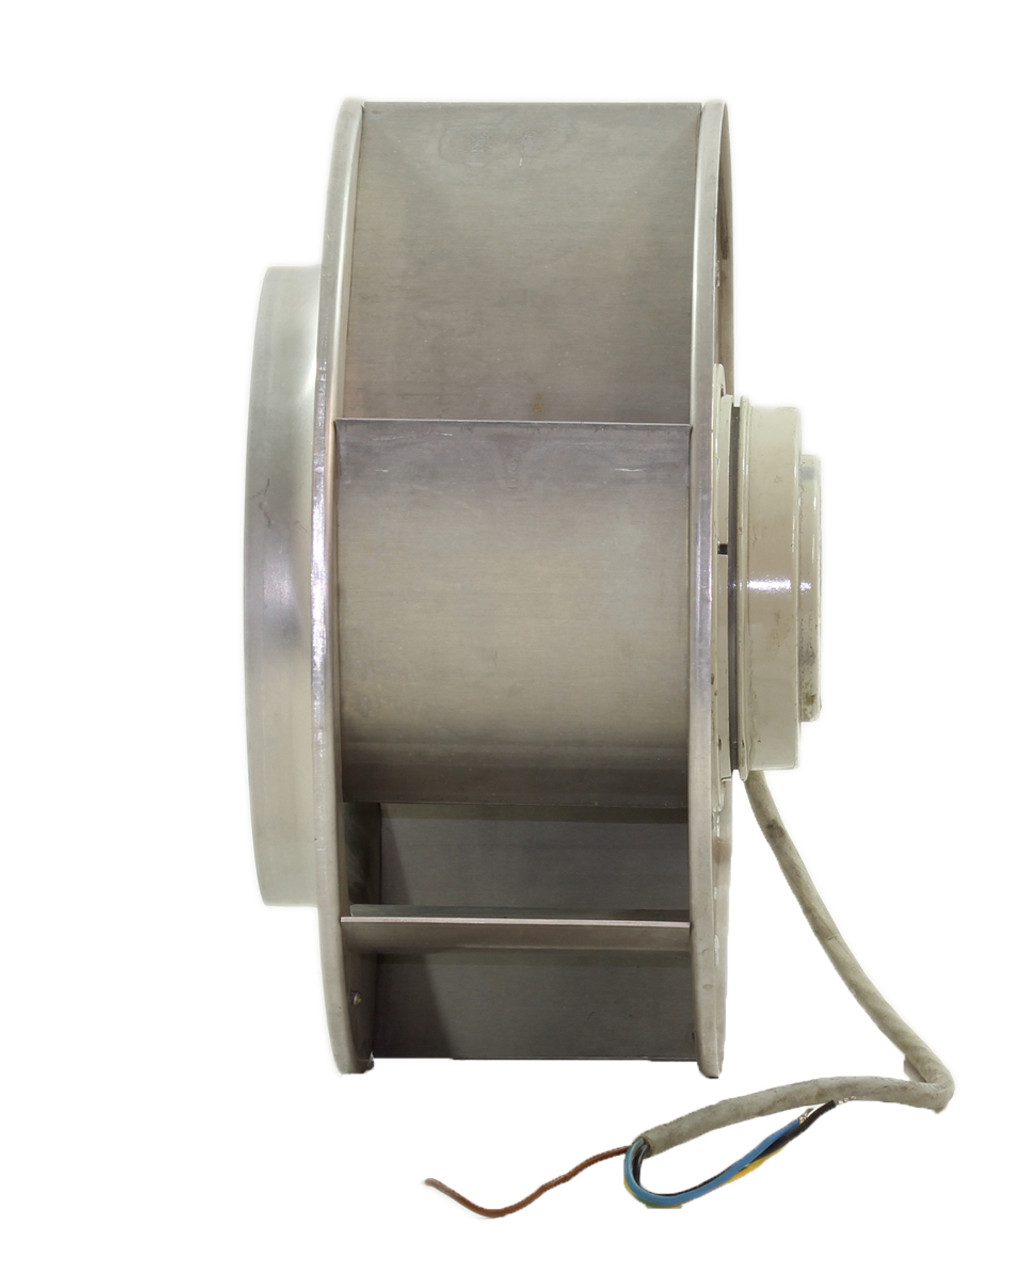 Ziehl-Abegg RH35M-4EK.4F.1R Centrifugal Fan Blower 400V 60 Hz